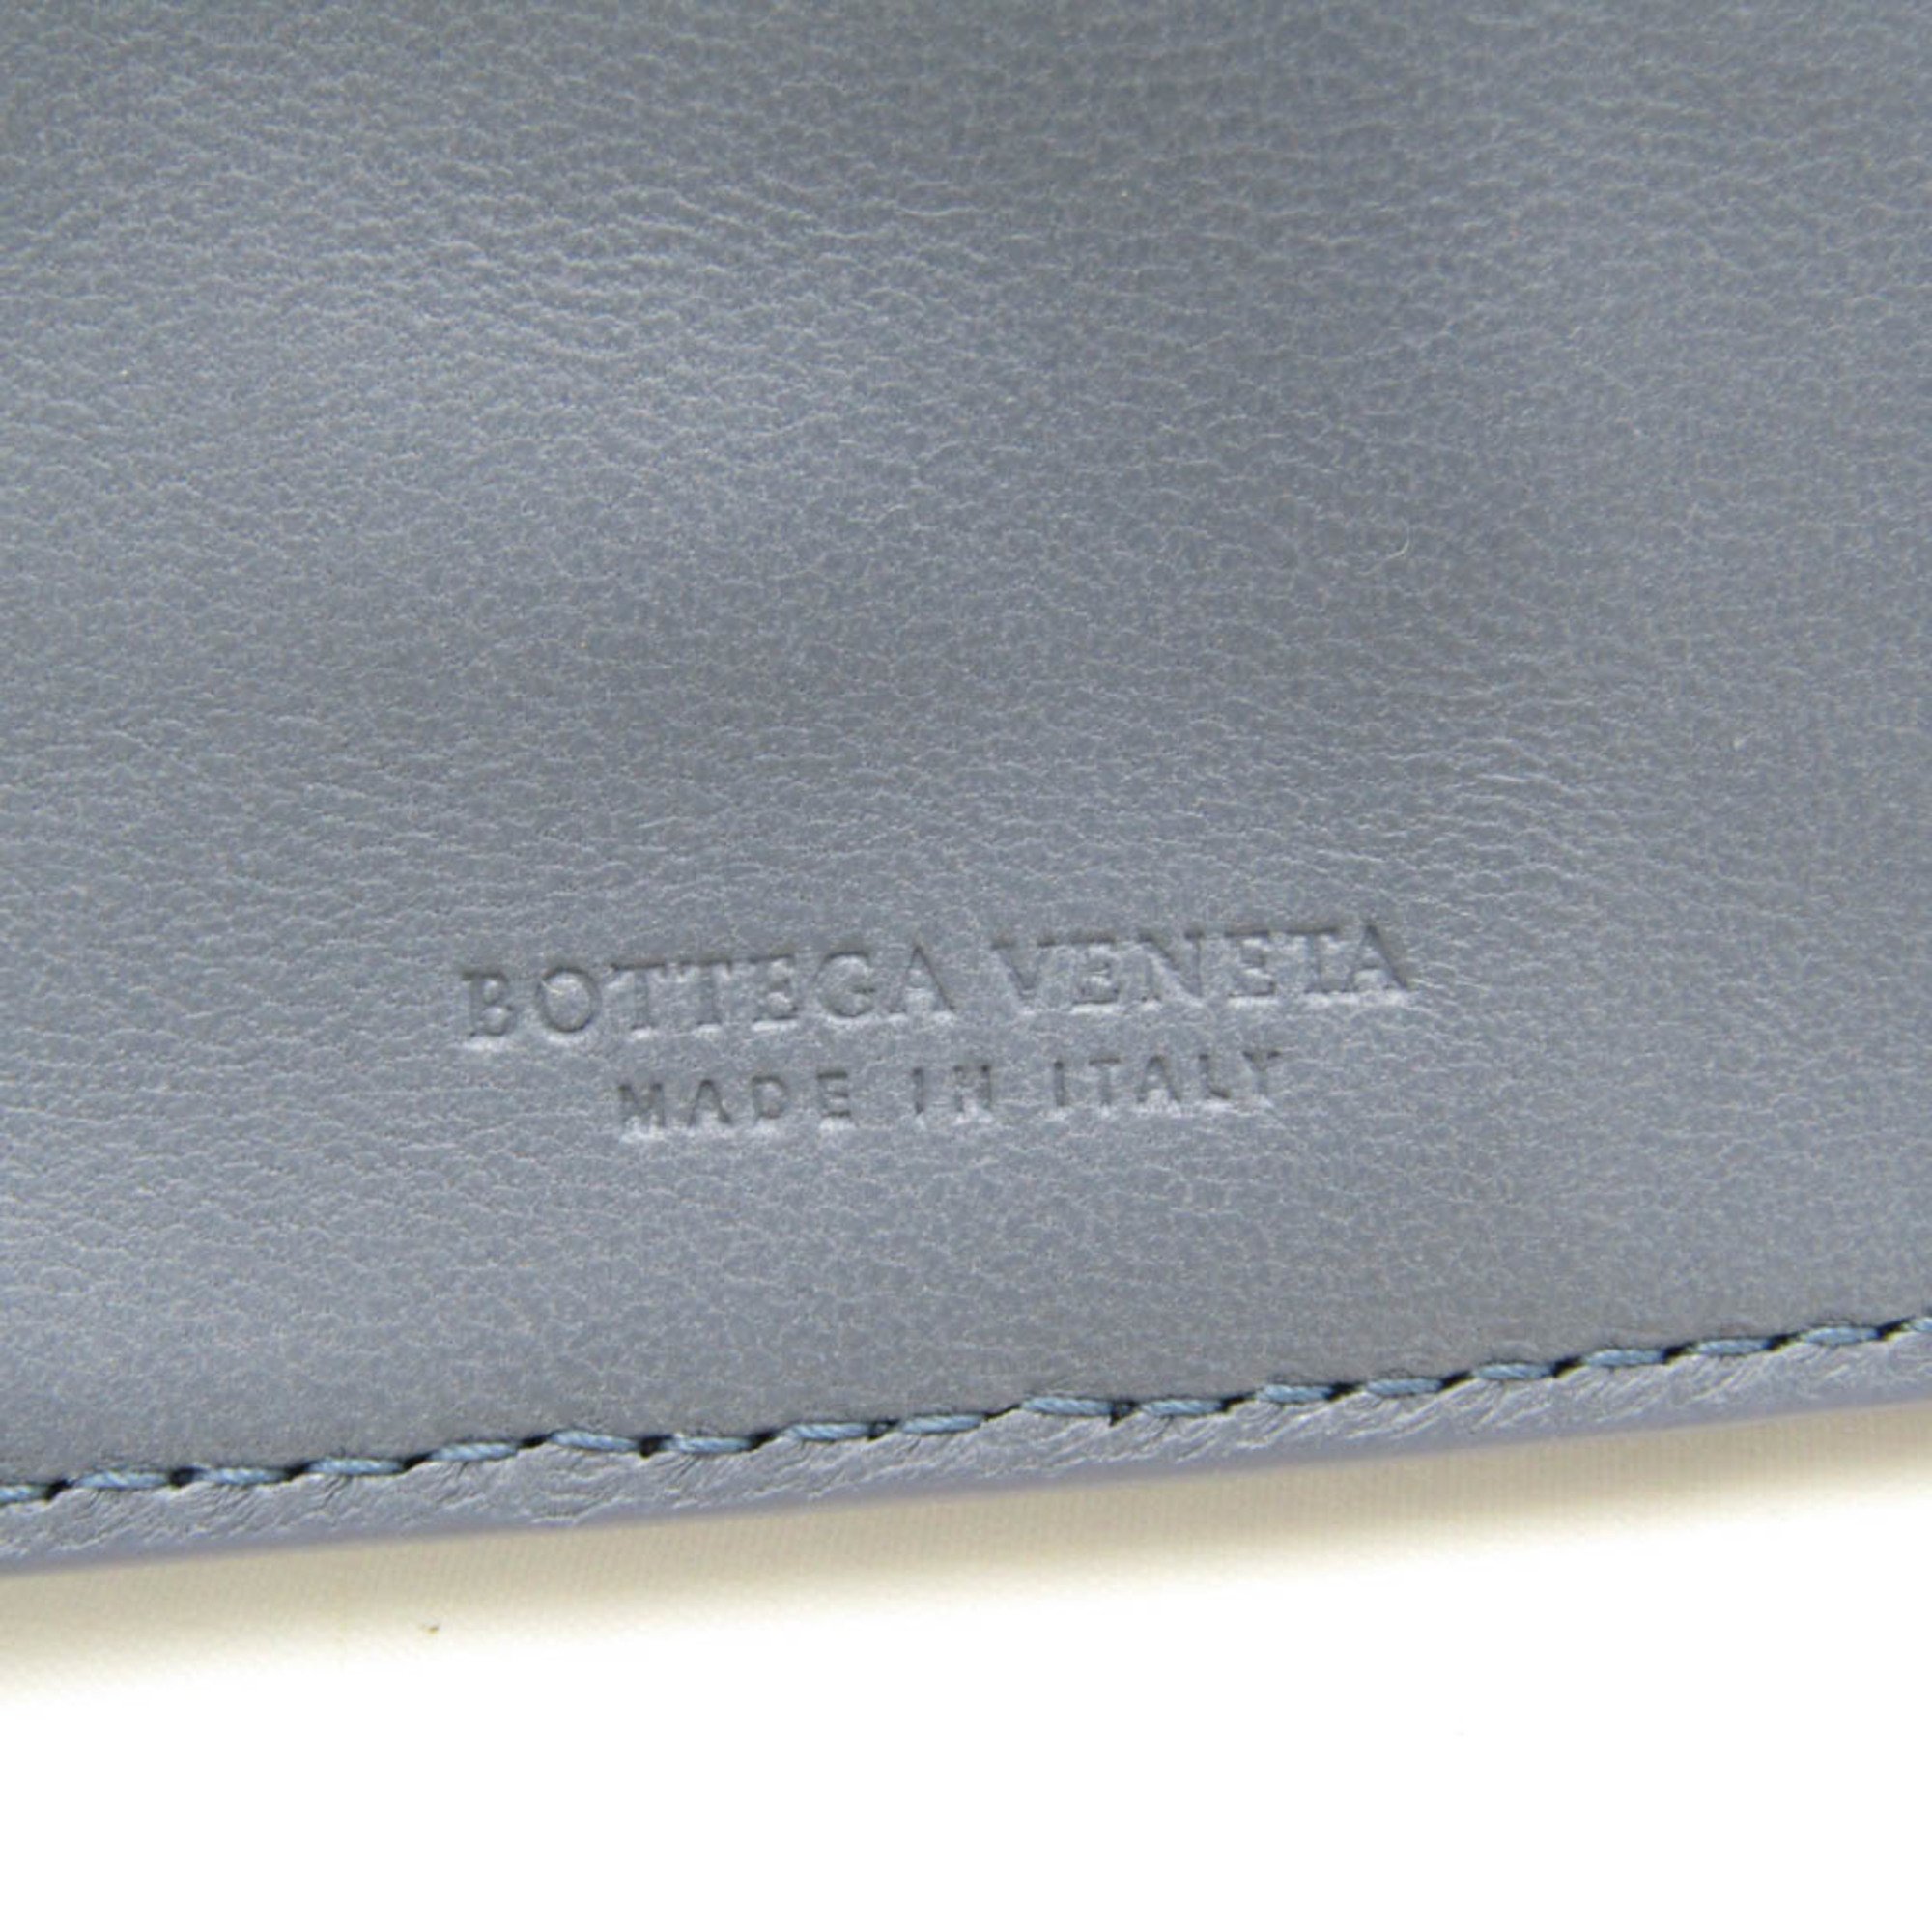 Bottega Veneta Intrecciato Men,Women Leather Long Wallet (bi-fold) Light Blue Gray